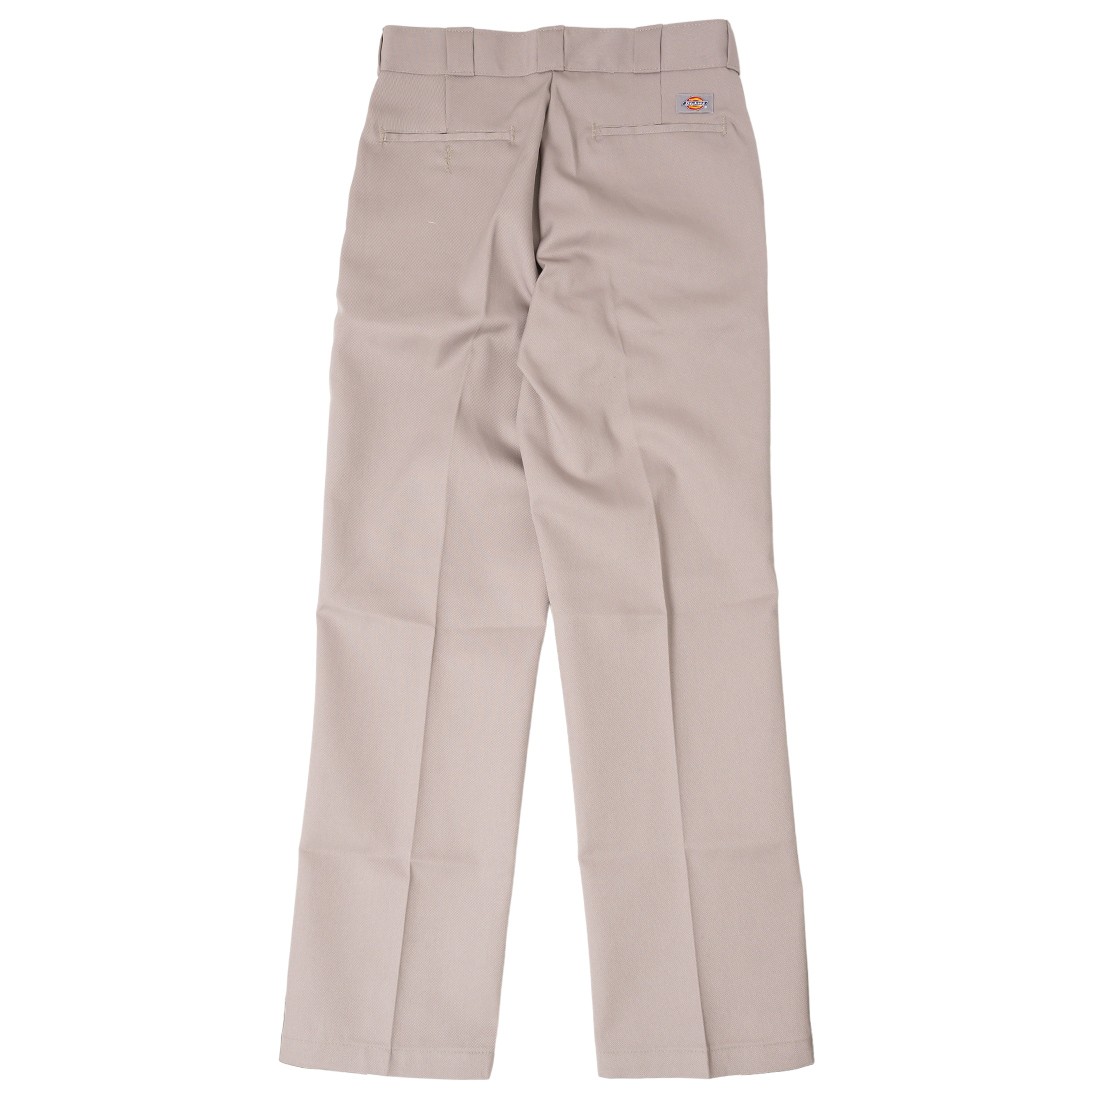 Dickies Men's 874 Pants Classic Original Fit Work School Uniform Straight  Leg, Silver, 31X30